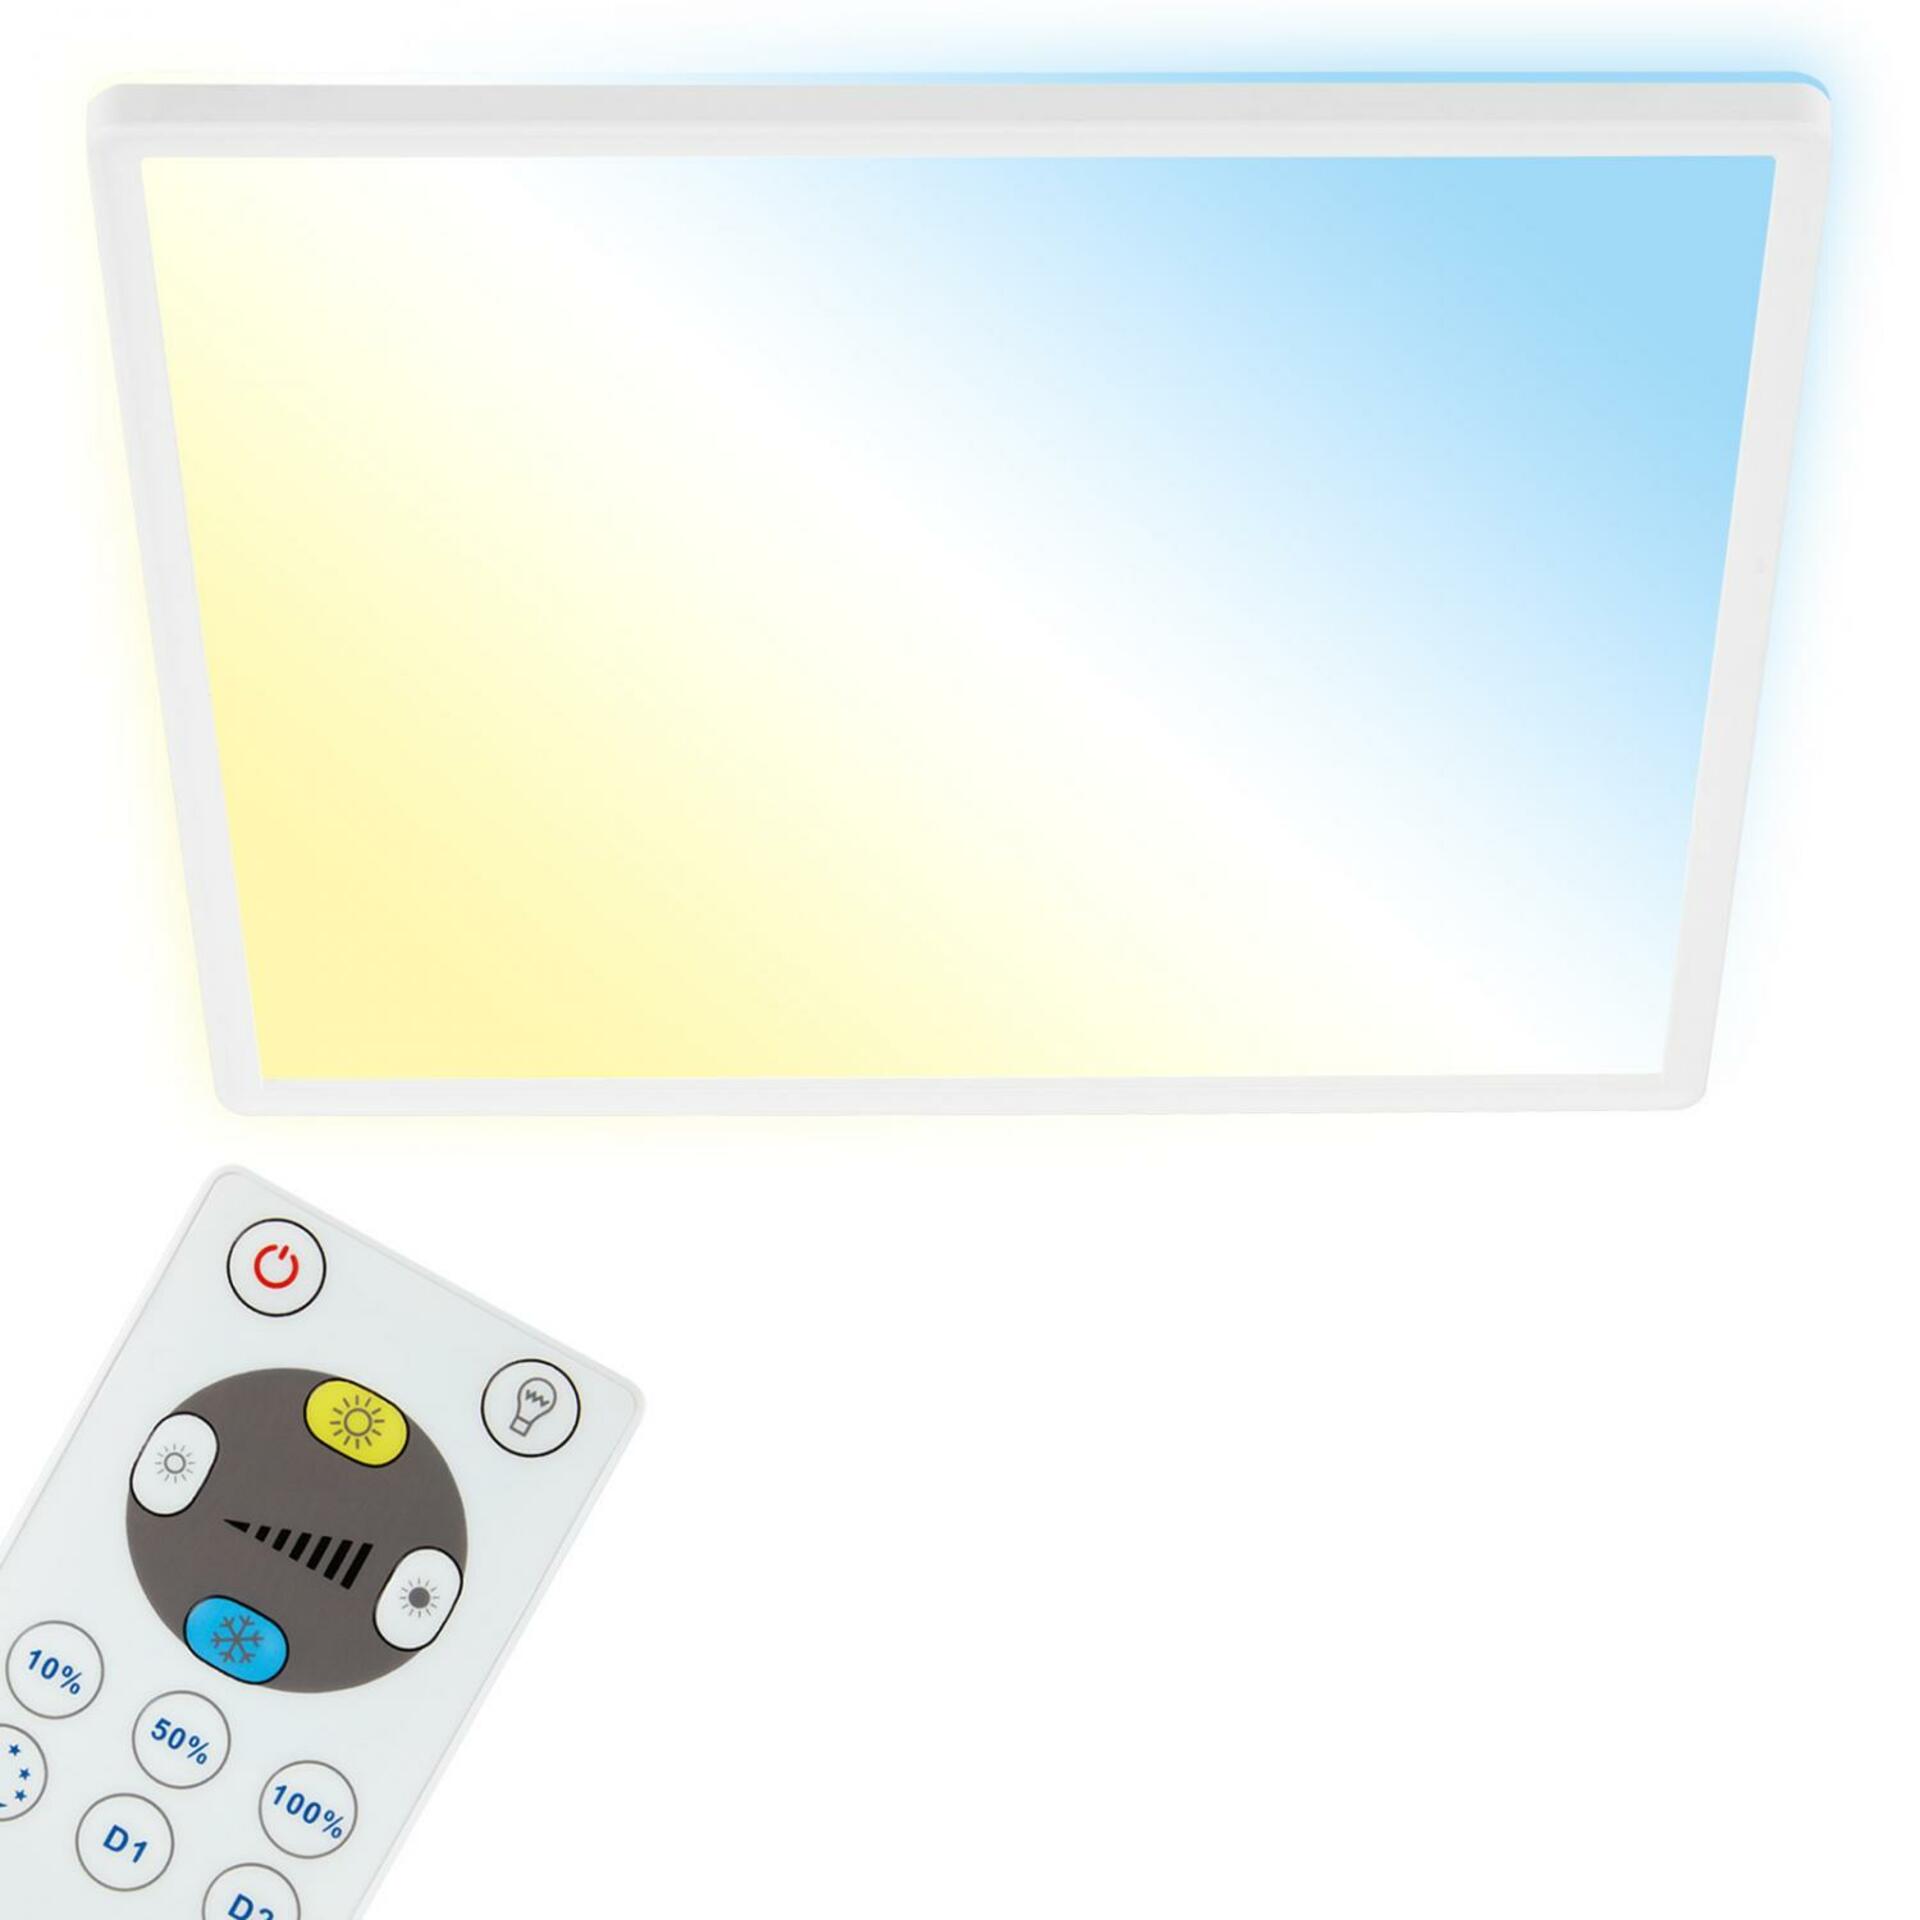 BRILONER Slim CCT svítidlo LED panel, 42 cm, 22 W, bílé BRILO 7082-016